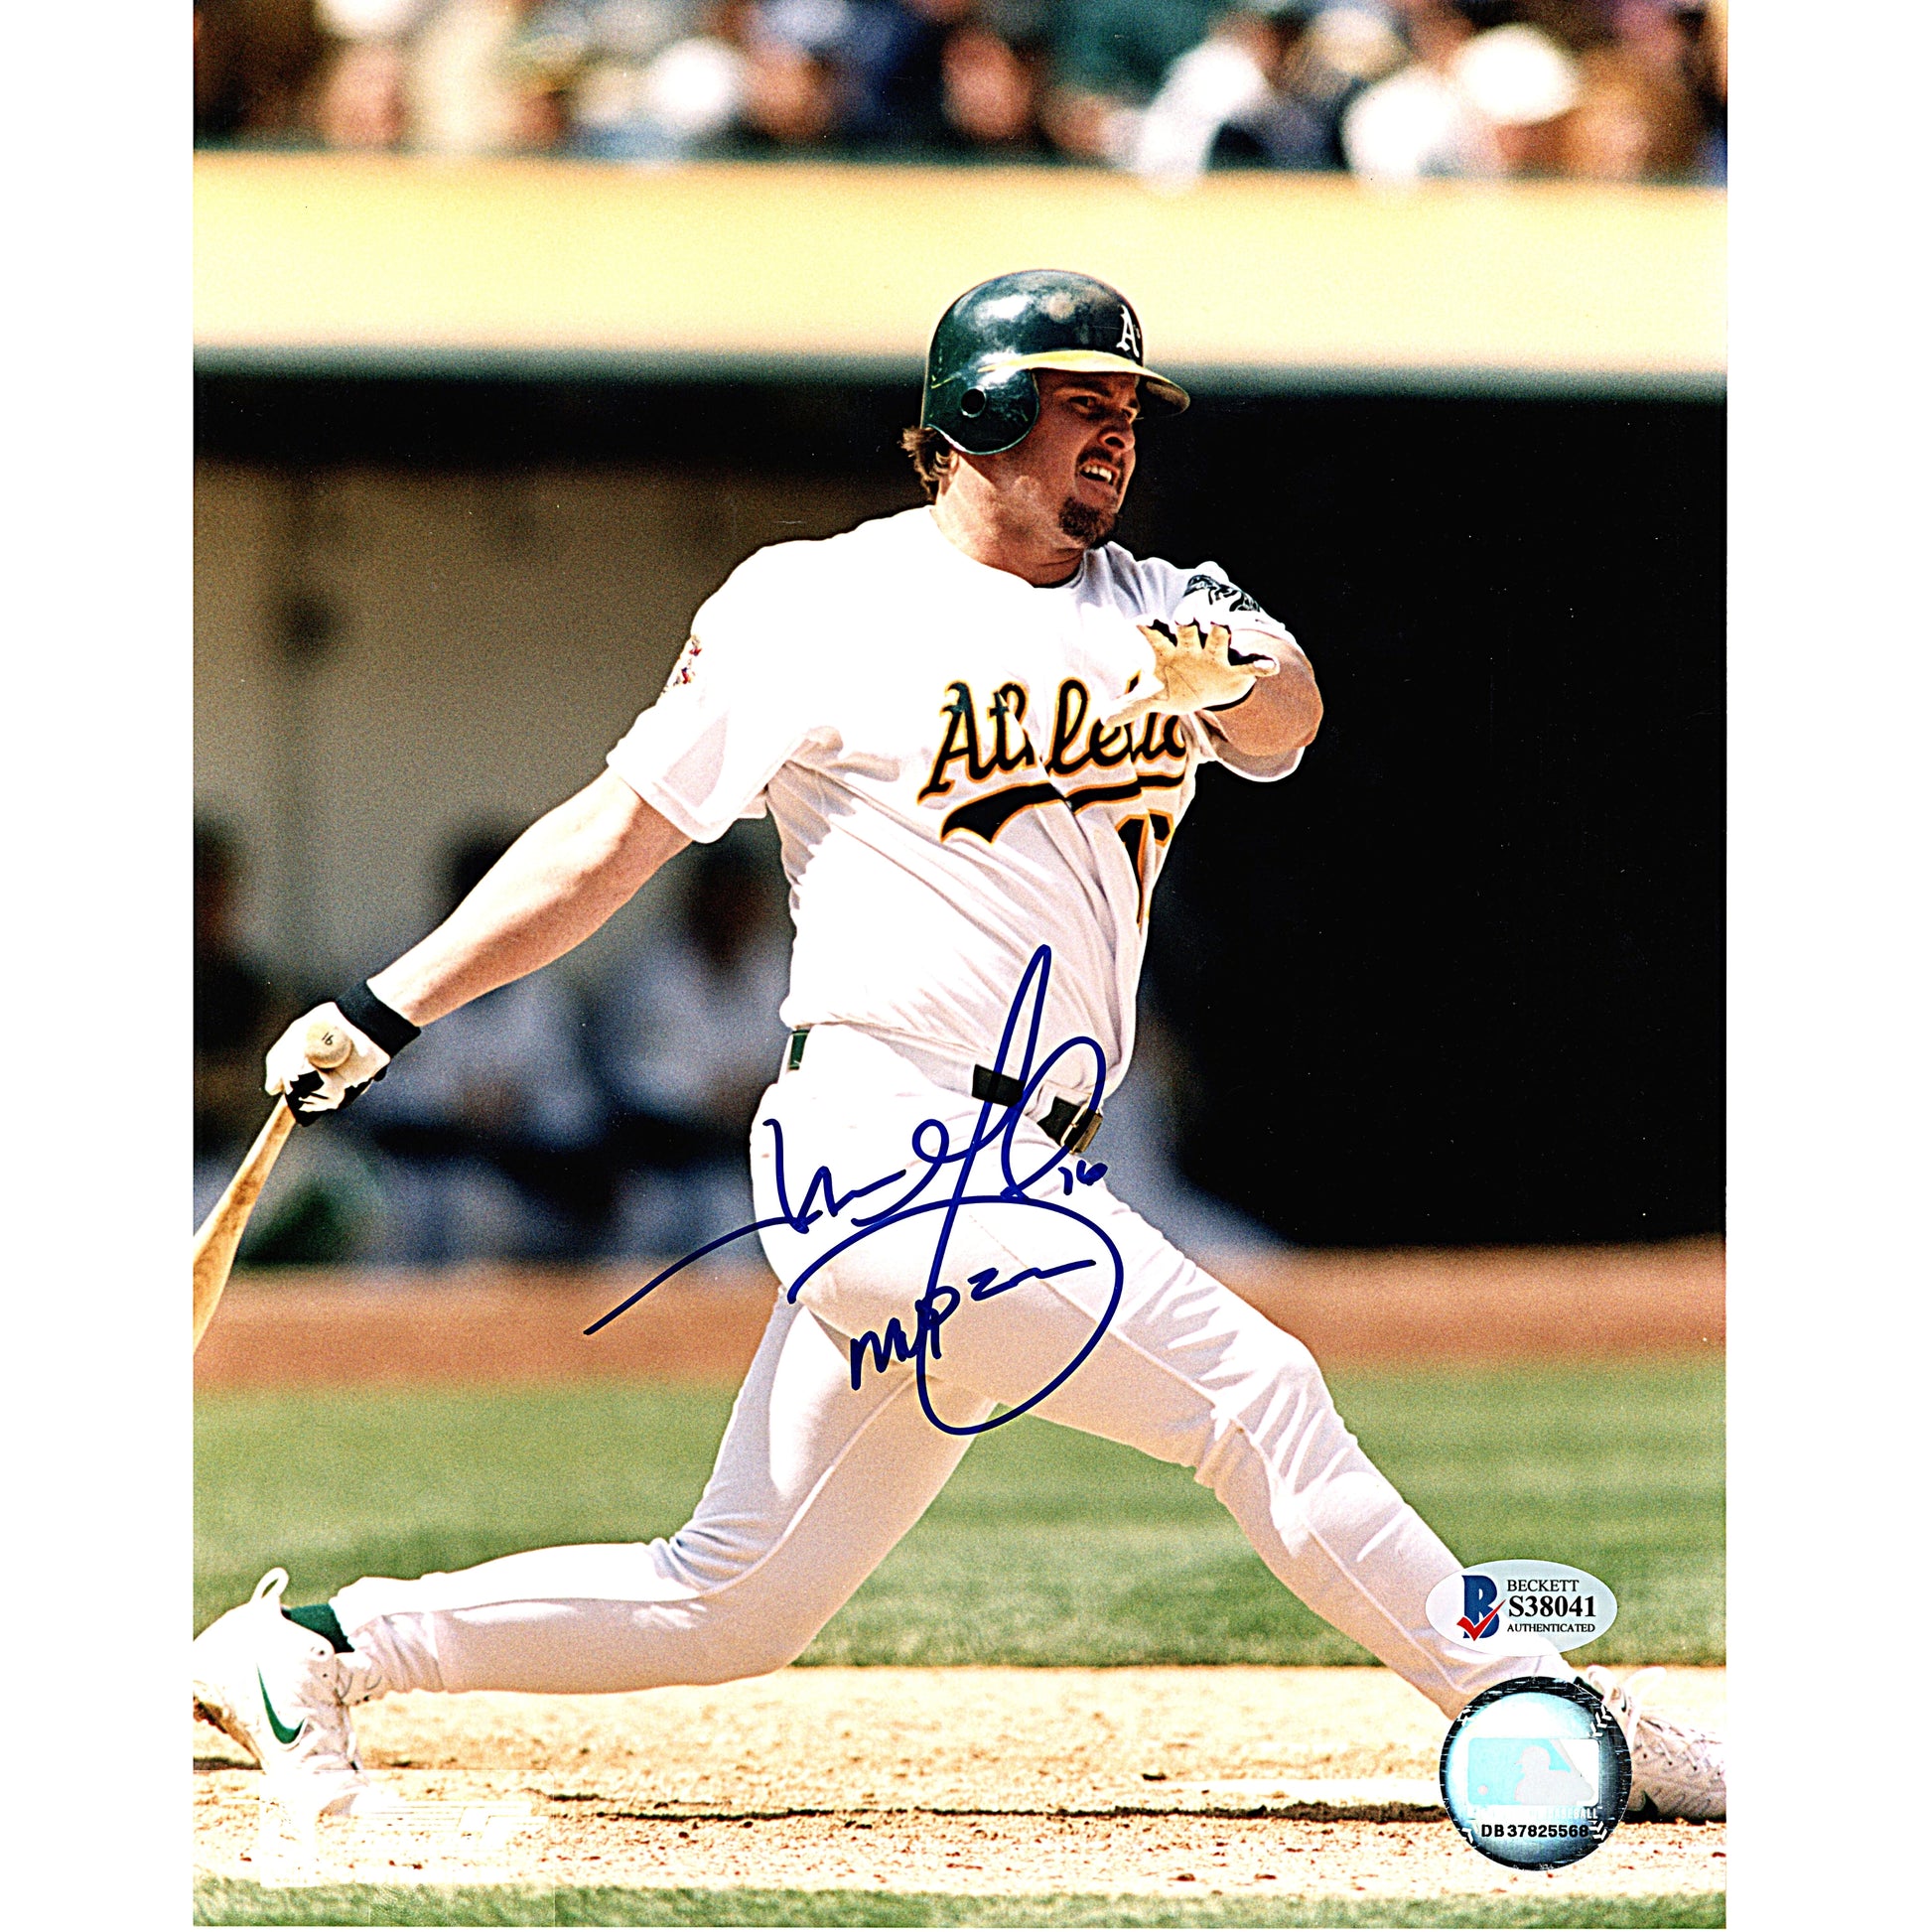 Baseballs- Autographed- Jason Giambi Signed Oakland Athletics 8x10 Photo 2000 MVP Inscription Beckett Authentication Services BAS S38041 - 102